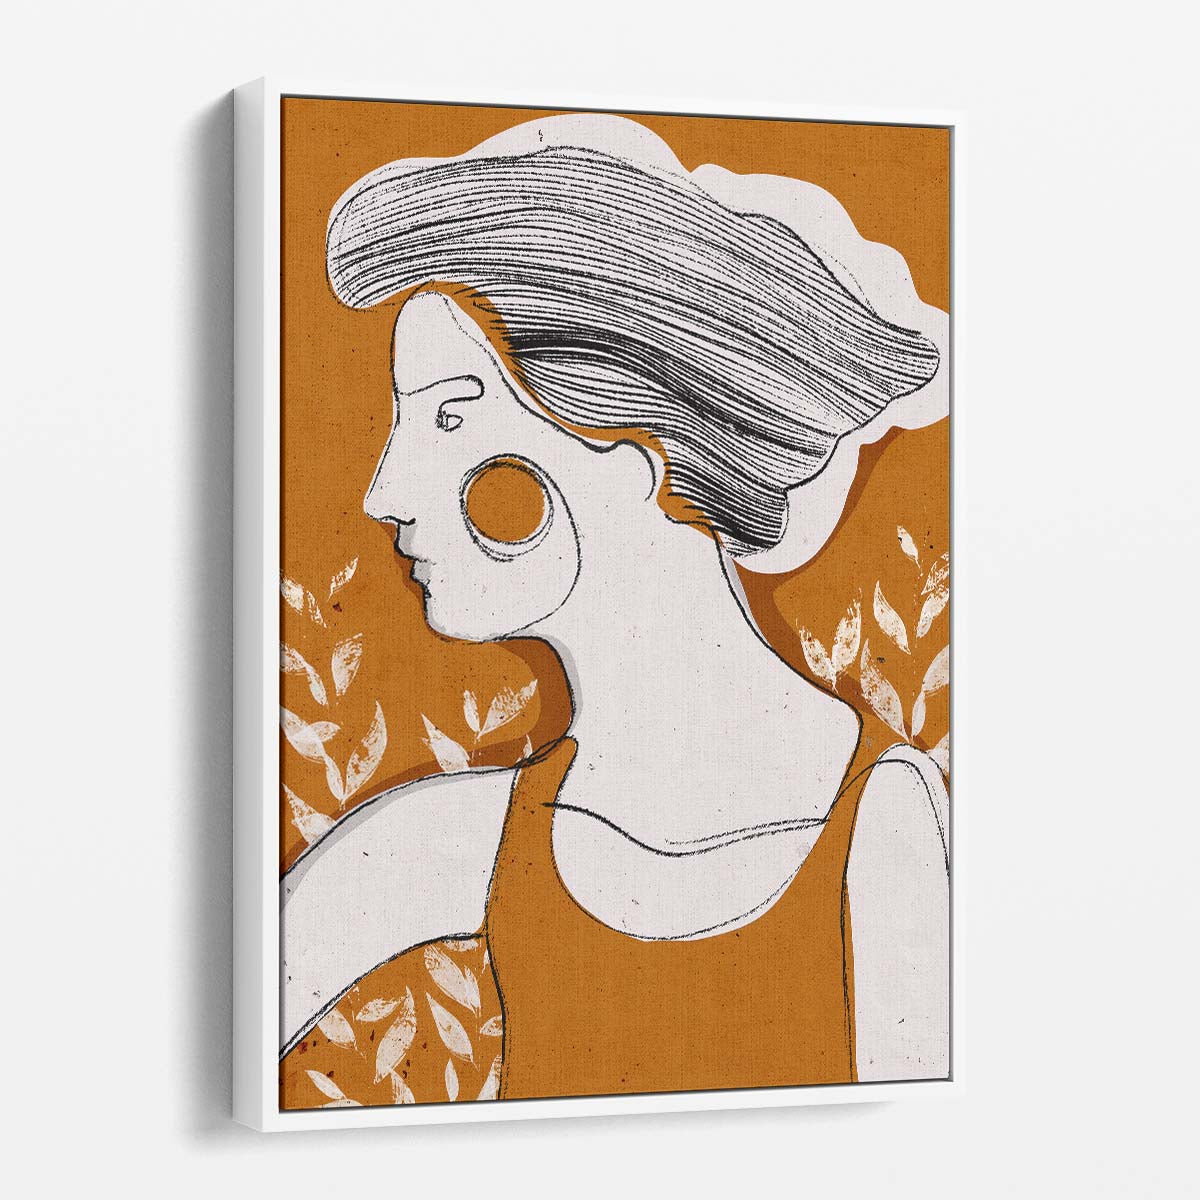 Treechild's Earthy Woman Portrait Illustration in Fineline Beige & Brown by Luxuriance Designs, made in USA